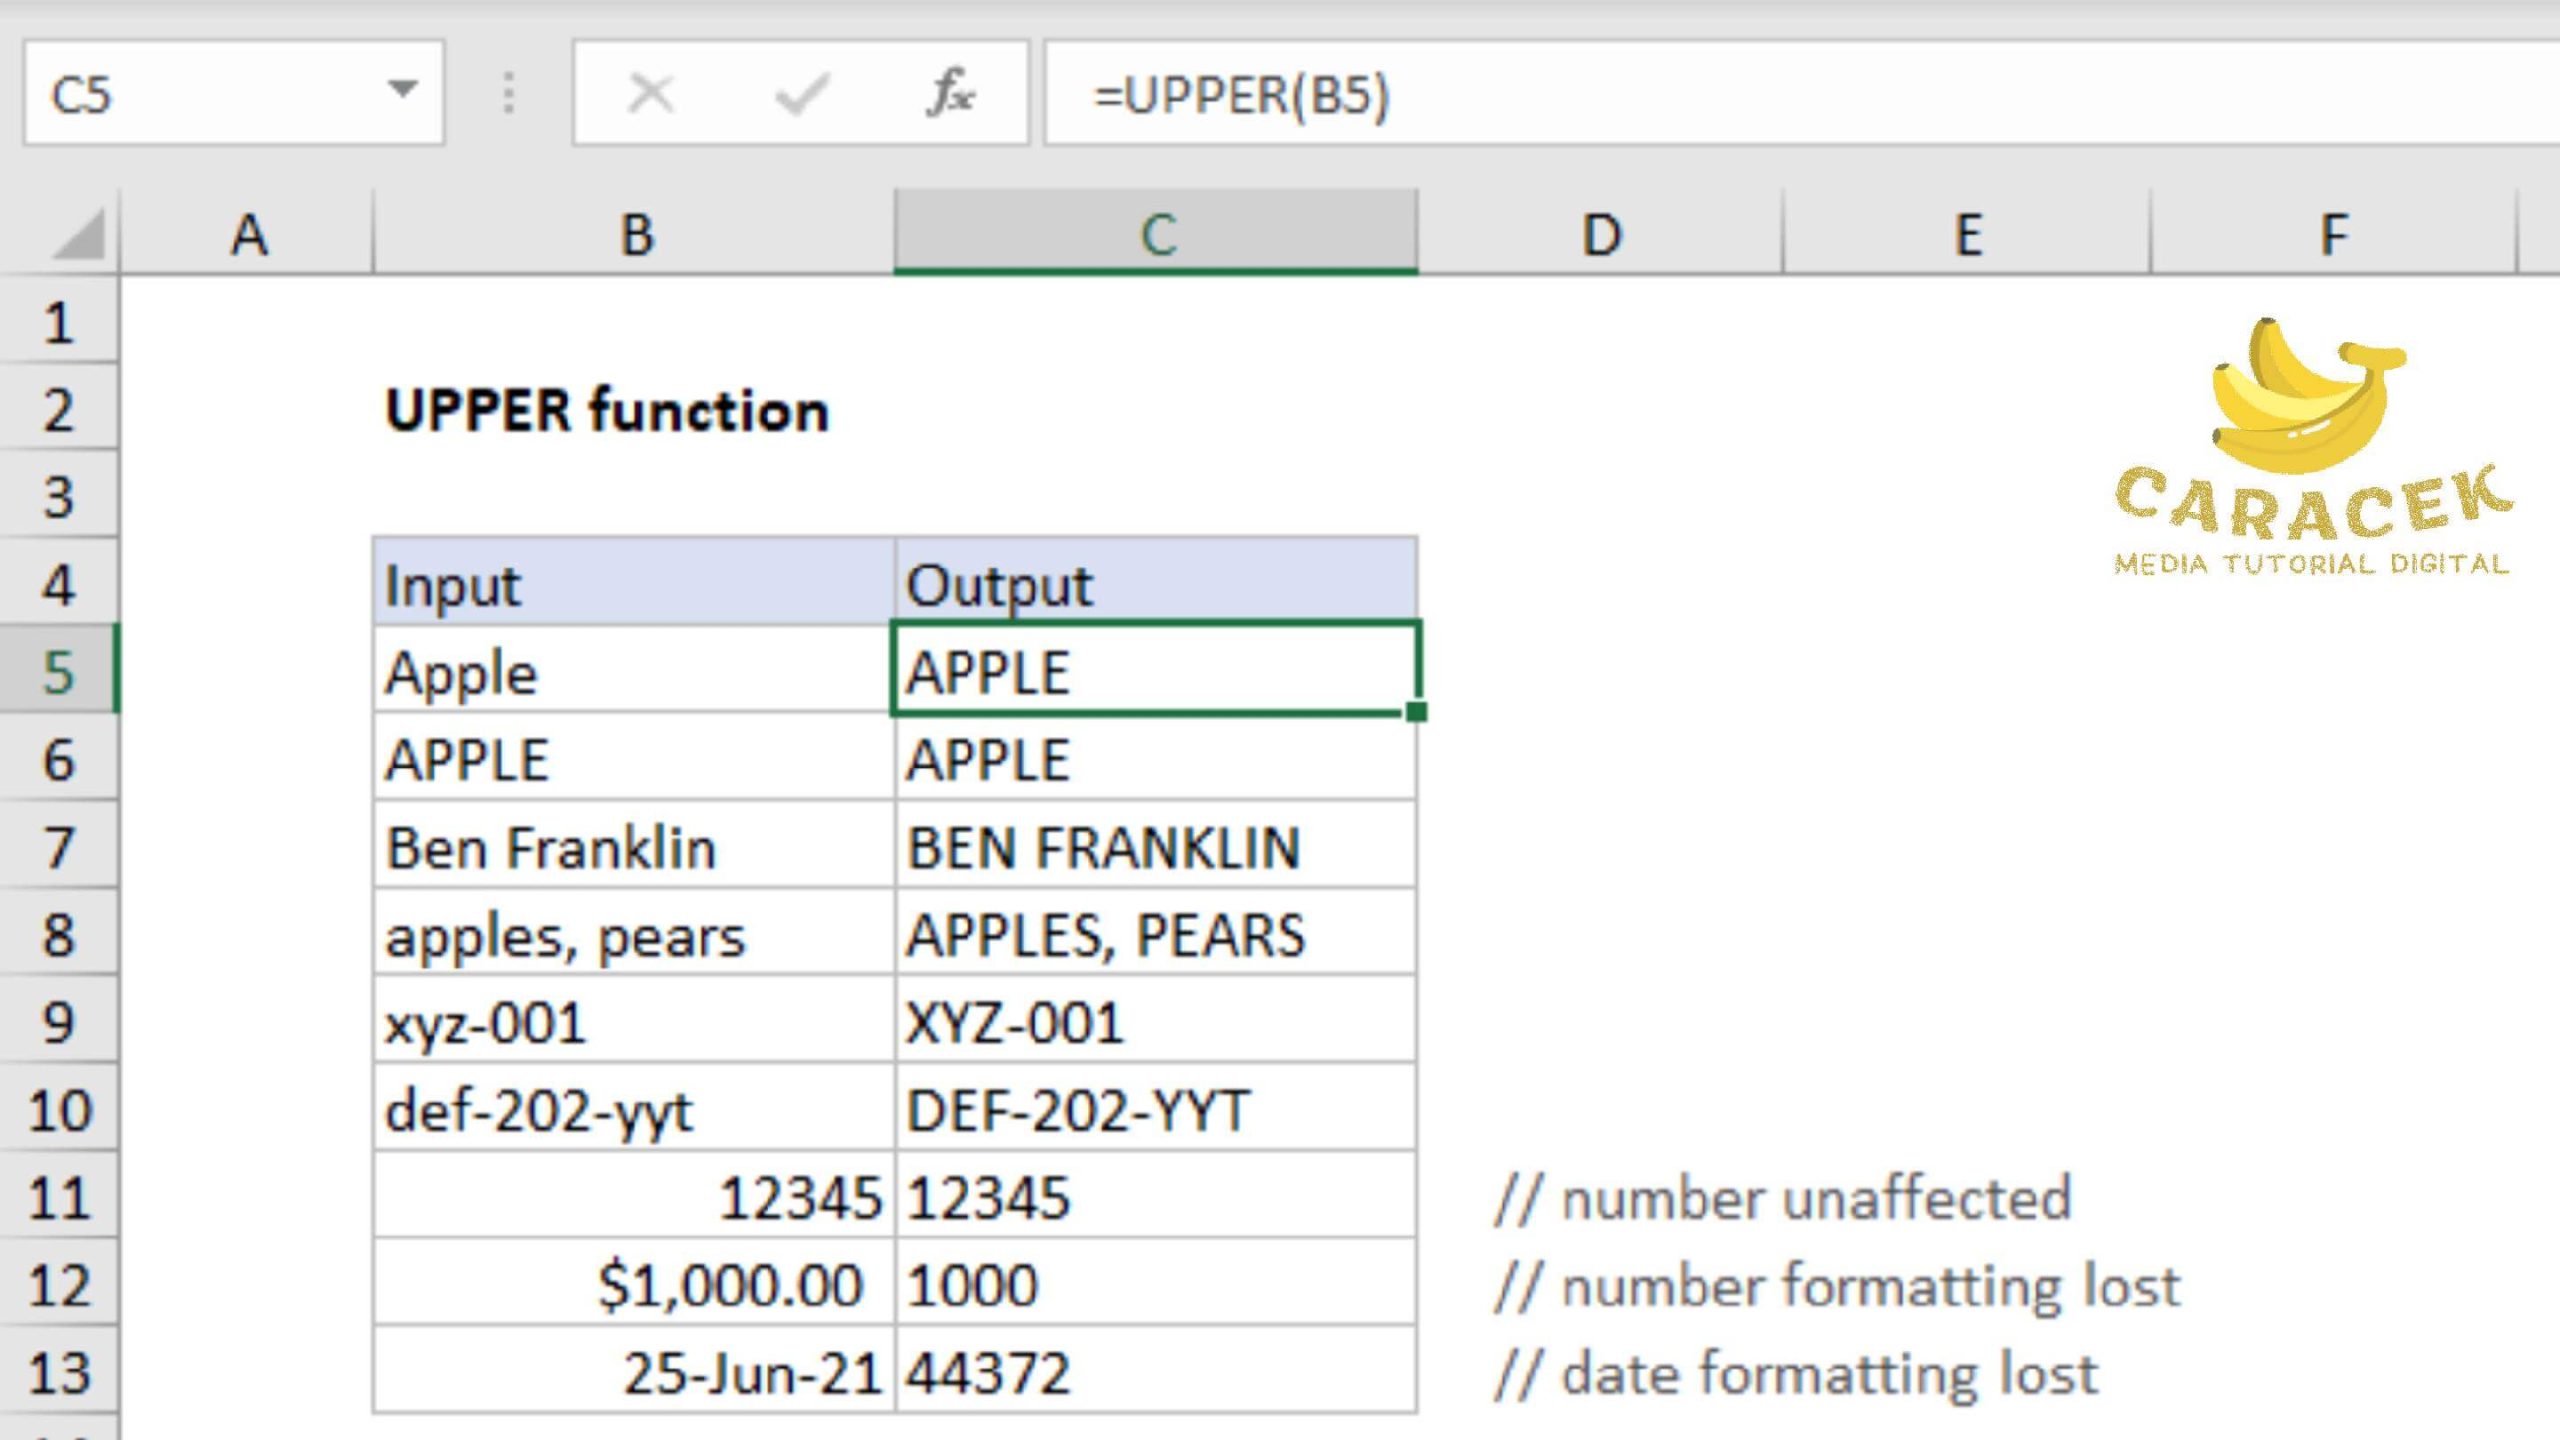 Cara Merubah Huruf Kecil Menjadi Huruf Besar di Excel